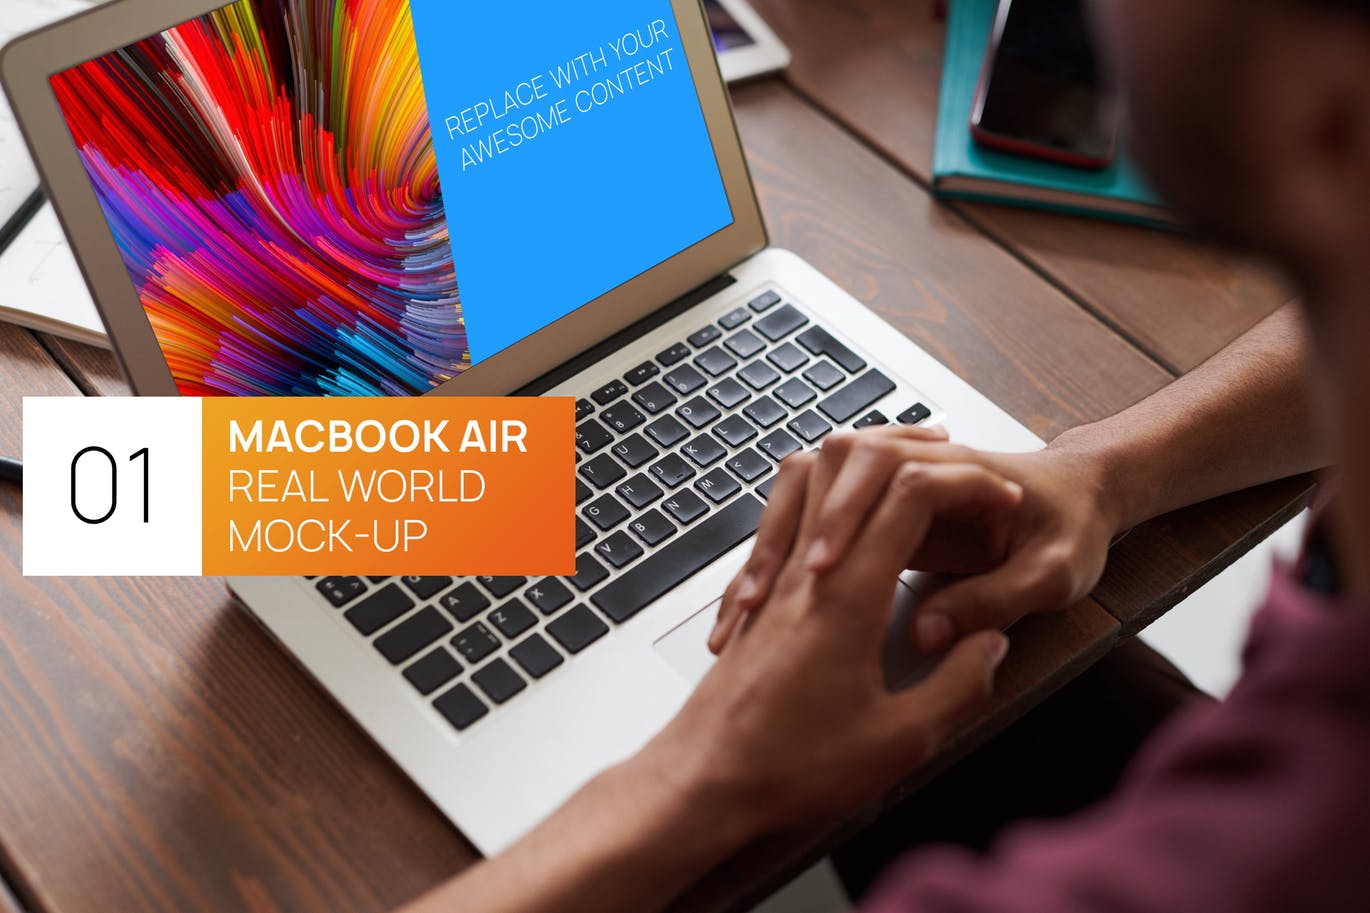 Macbook Air实景使用场景蚂蚁素材精选样机模板v2 Person Using MacBook Air Real World Photo Mock-up插图